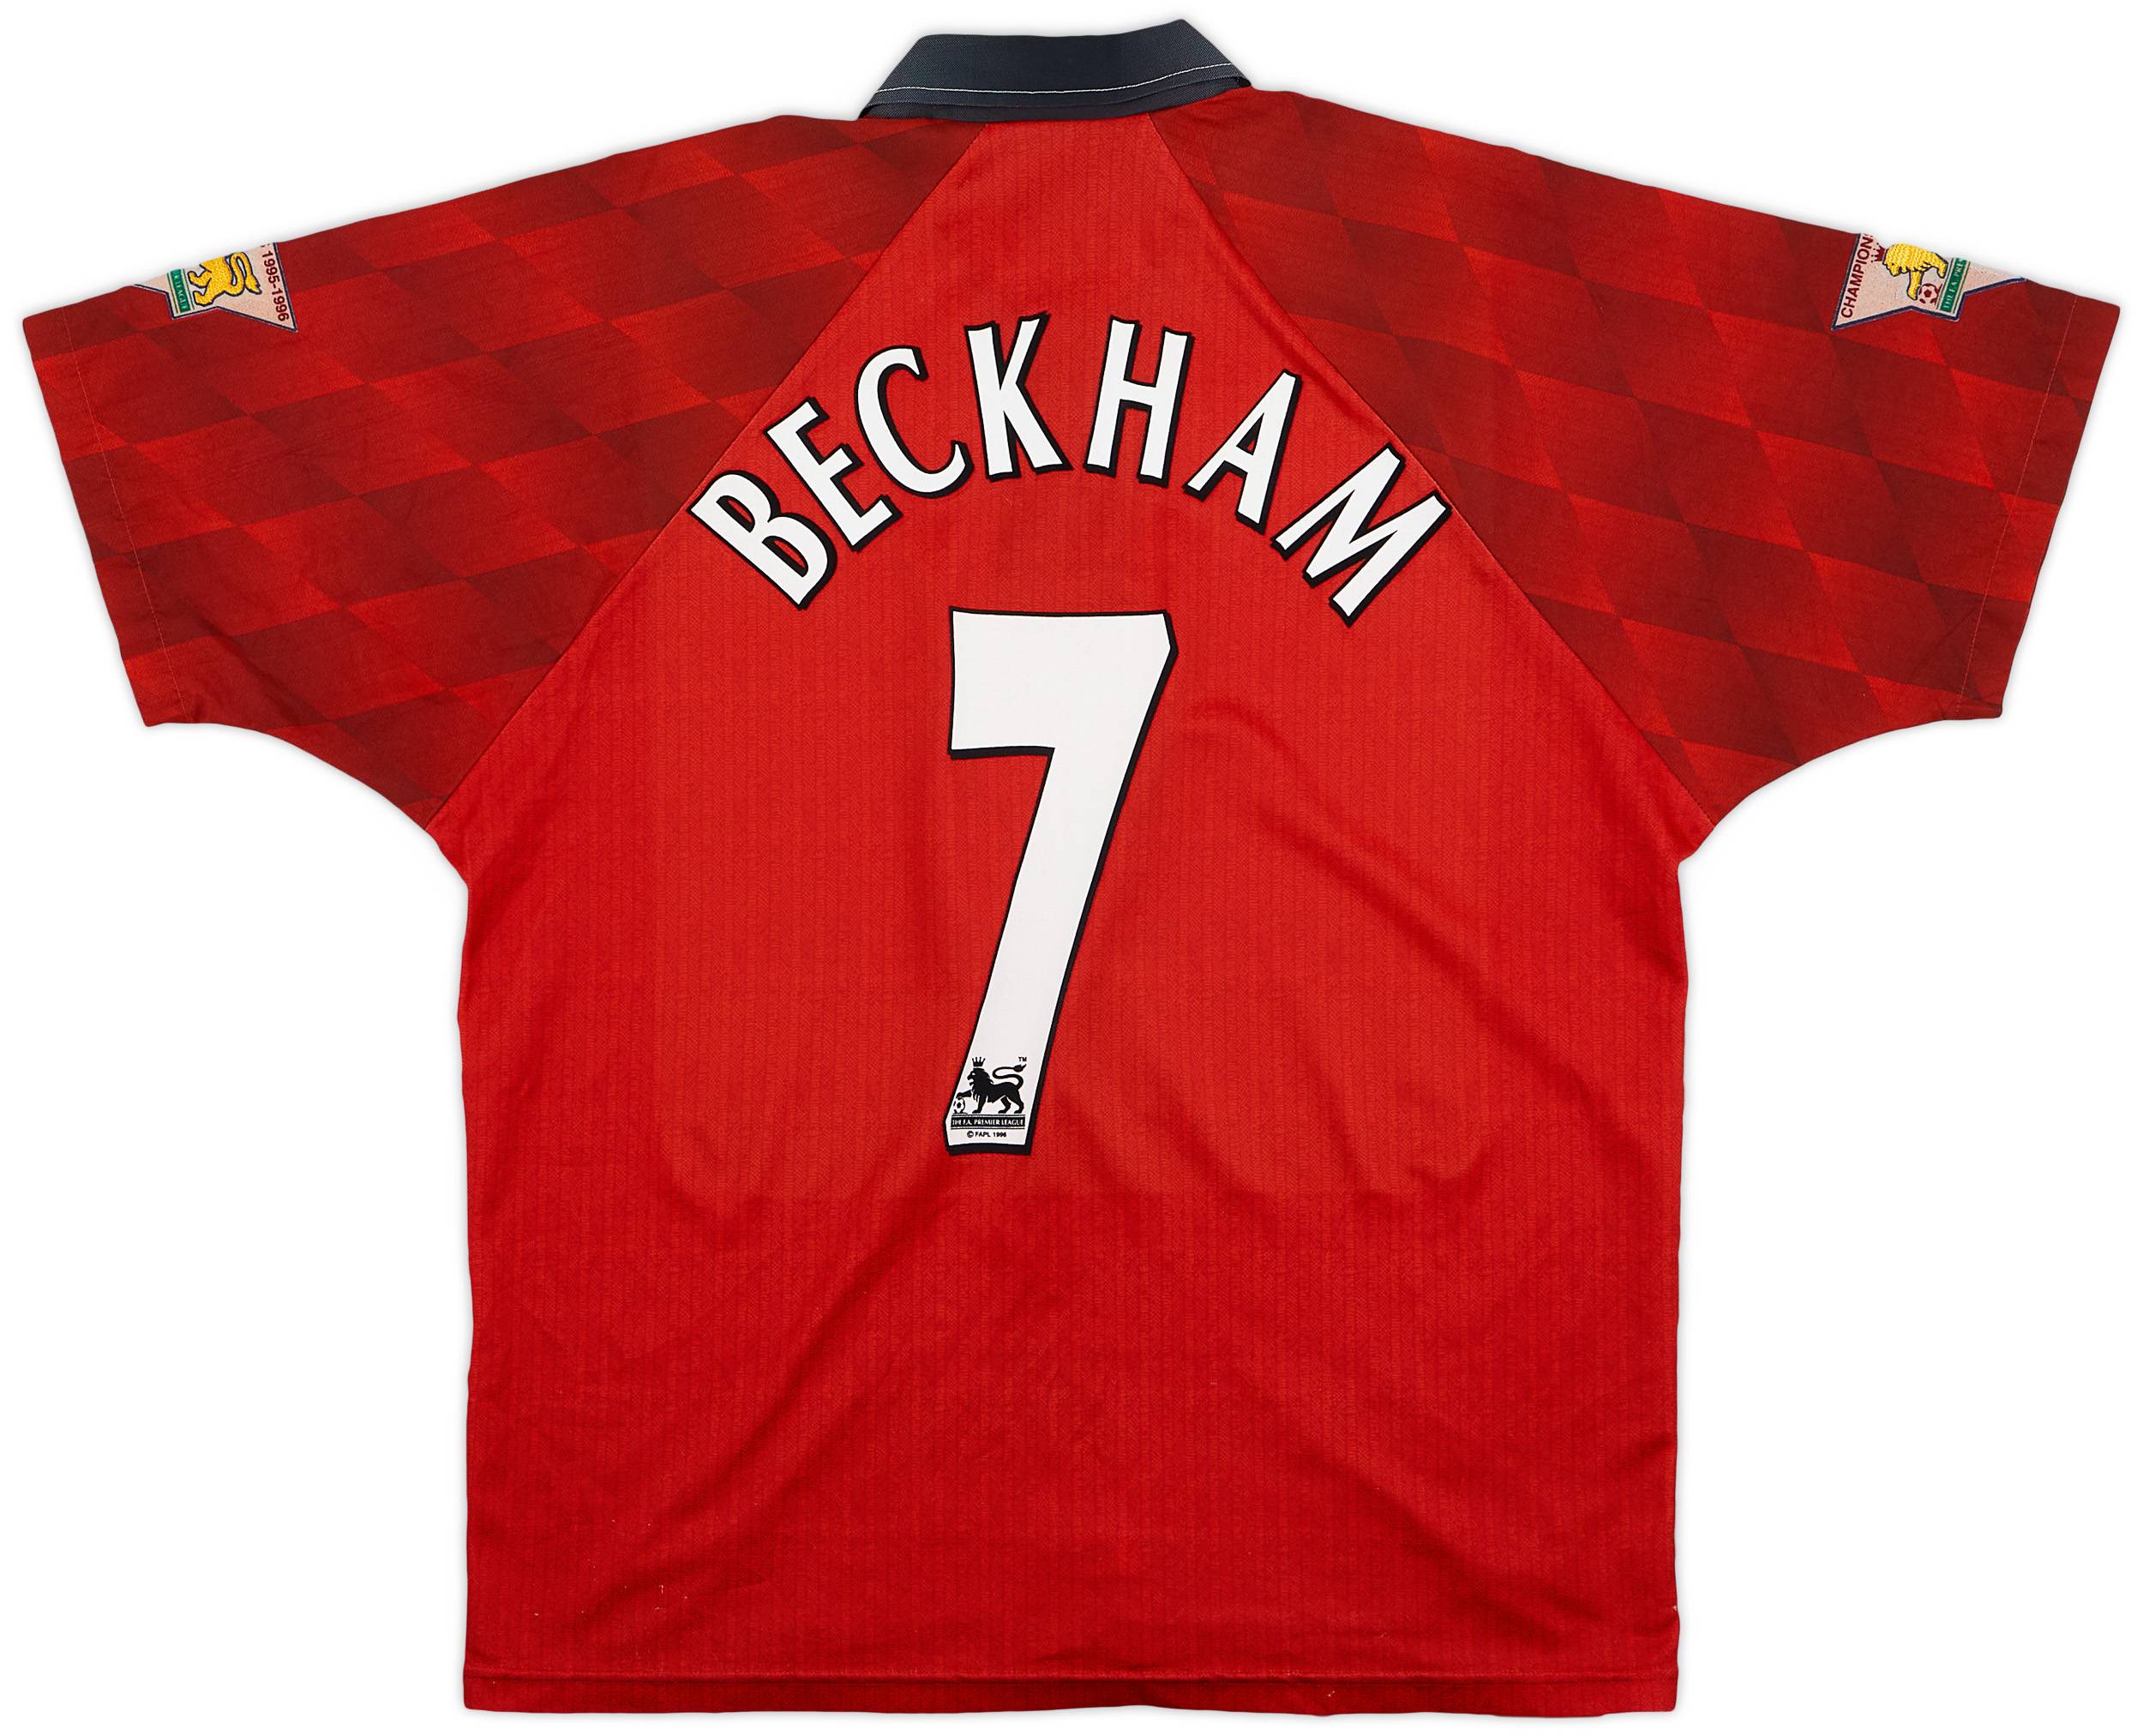 1996-98 Manchester United 'Champions 1995-96' Home Shirt Beckham #7 - 6/10 - (L)